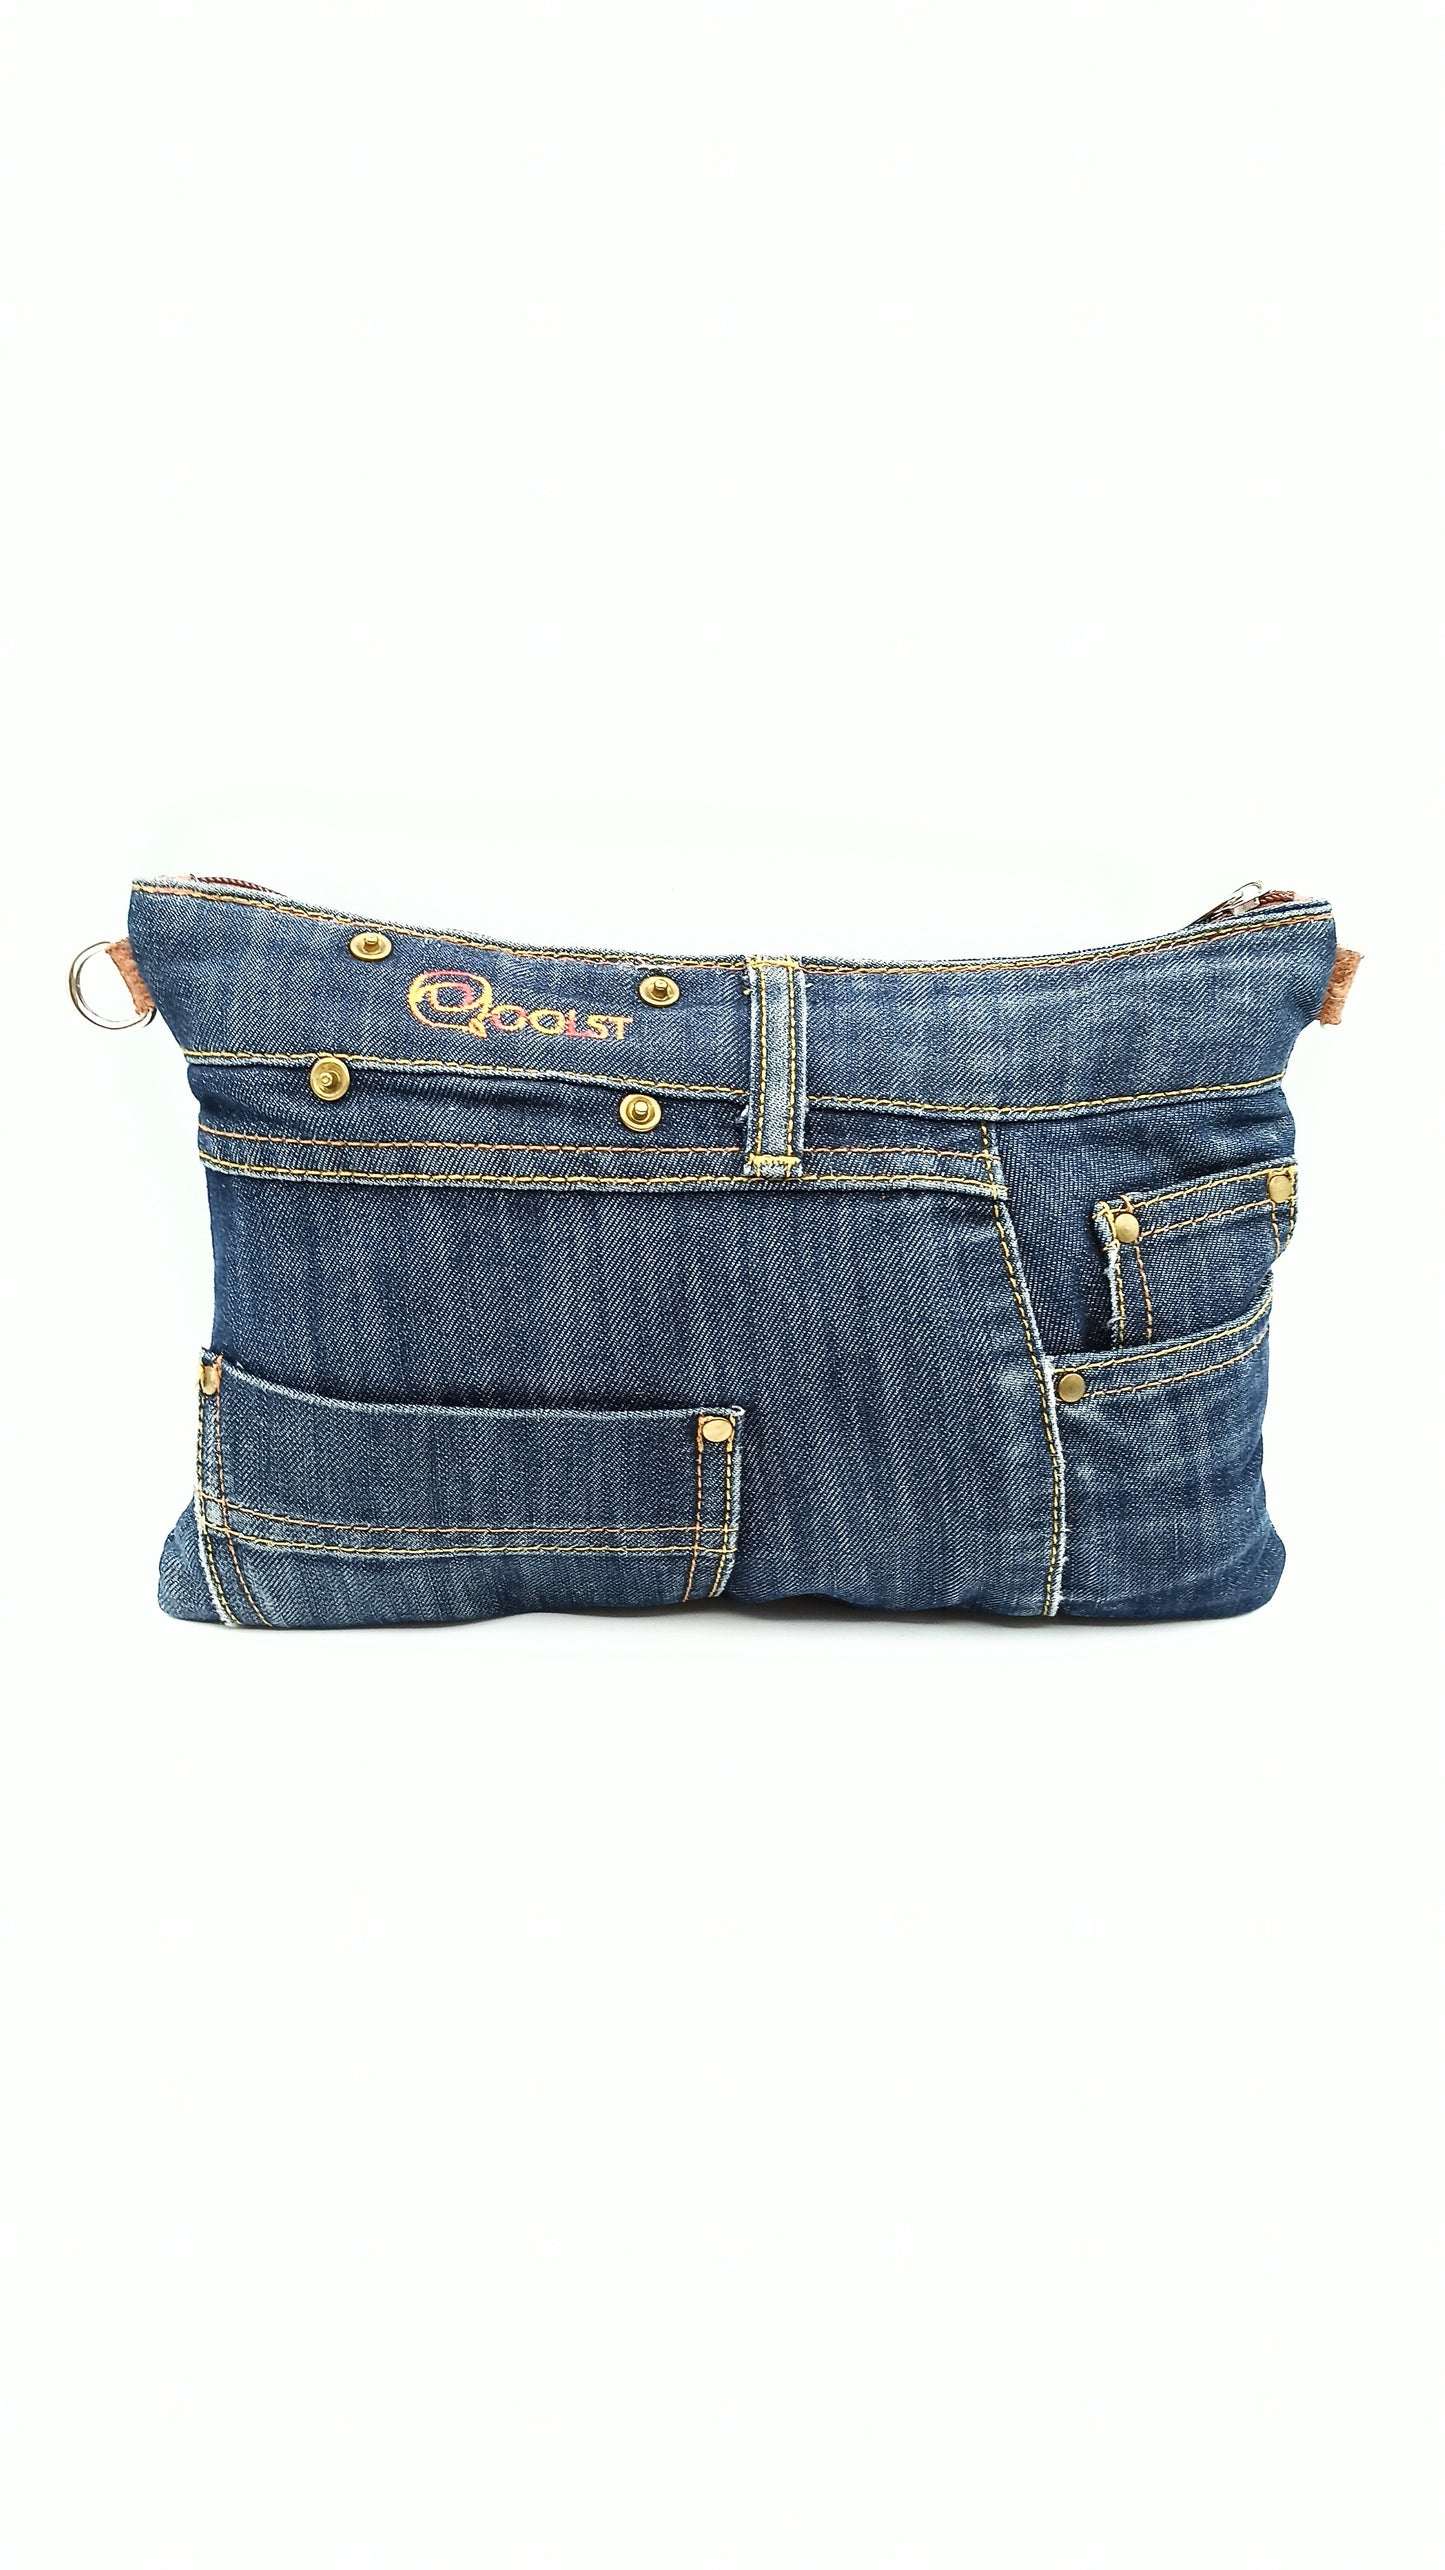 Qoolst Mini jeans men's and women's denim crossbody bag